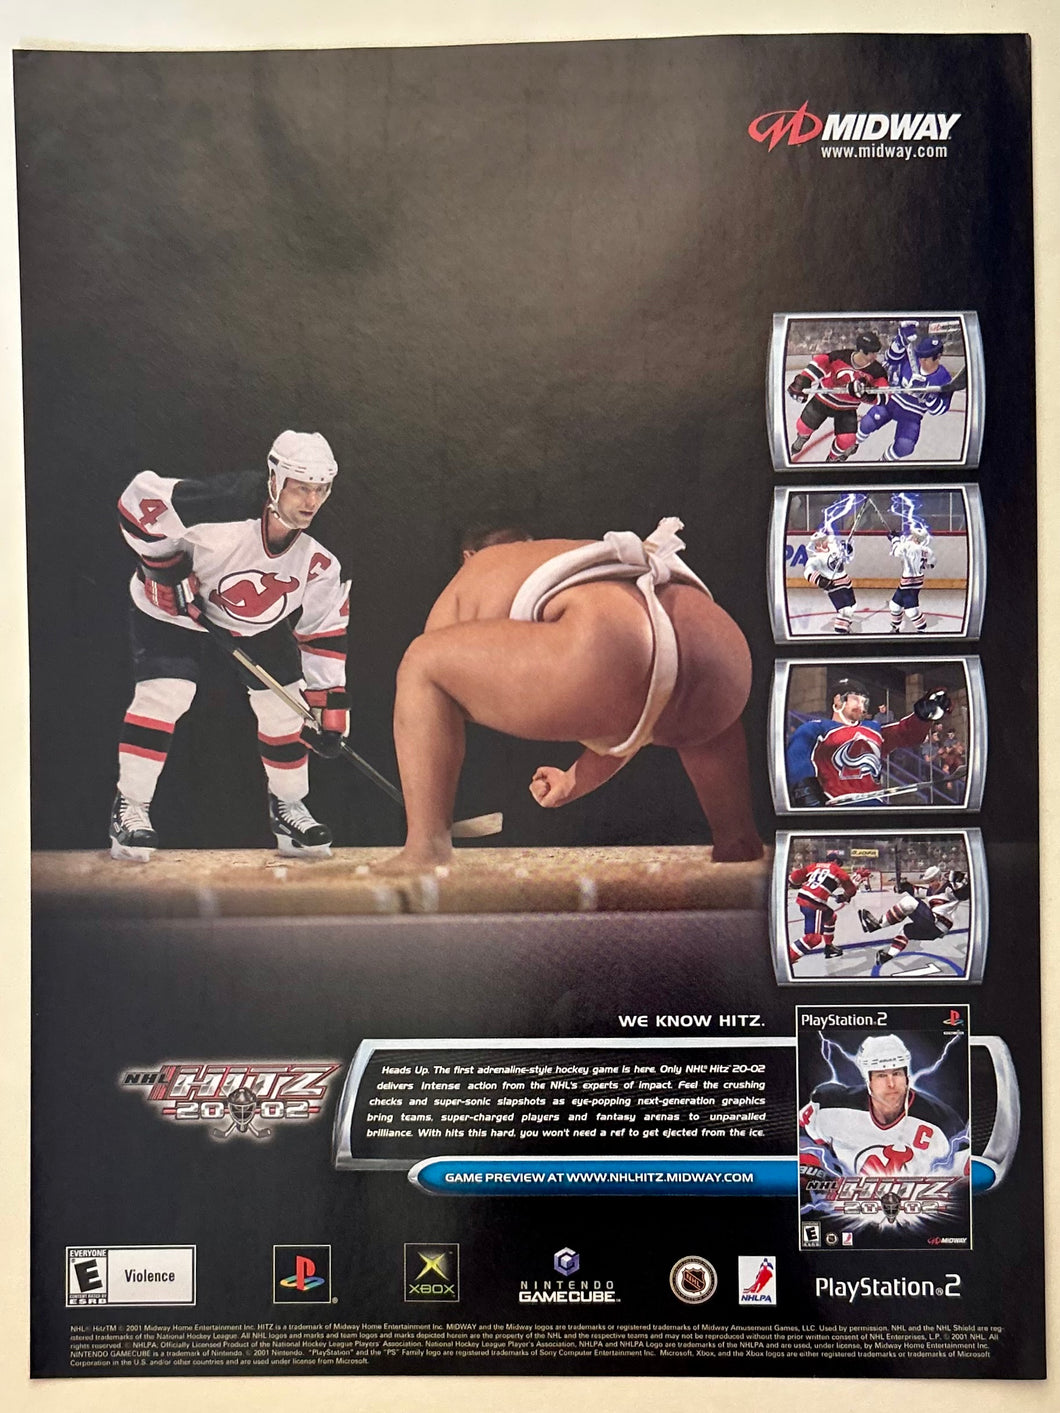 NHL Hitz 2002 - PS2 NGC Xbox - Original Vintage Advertisement - Print Ads - Laminated A4 Poster